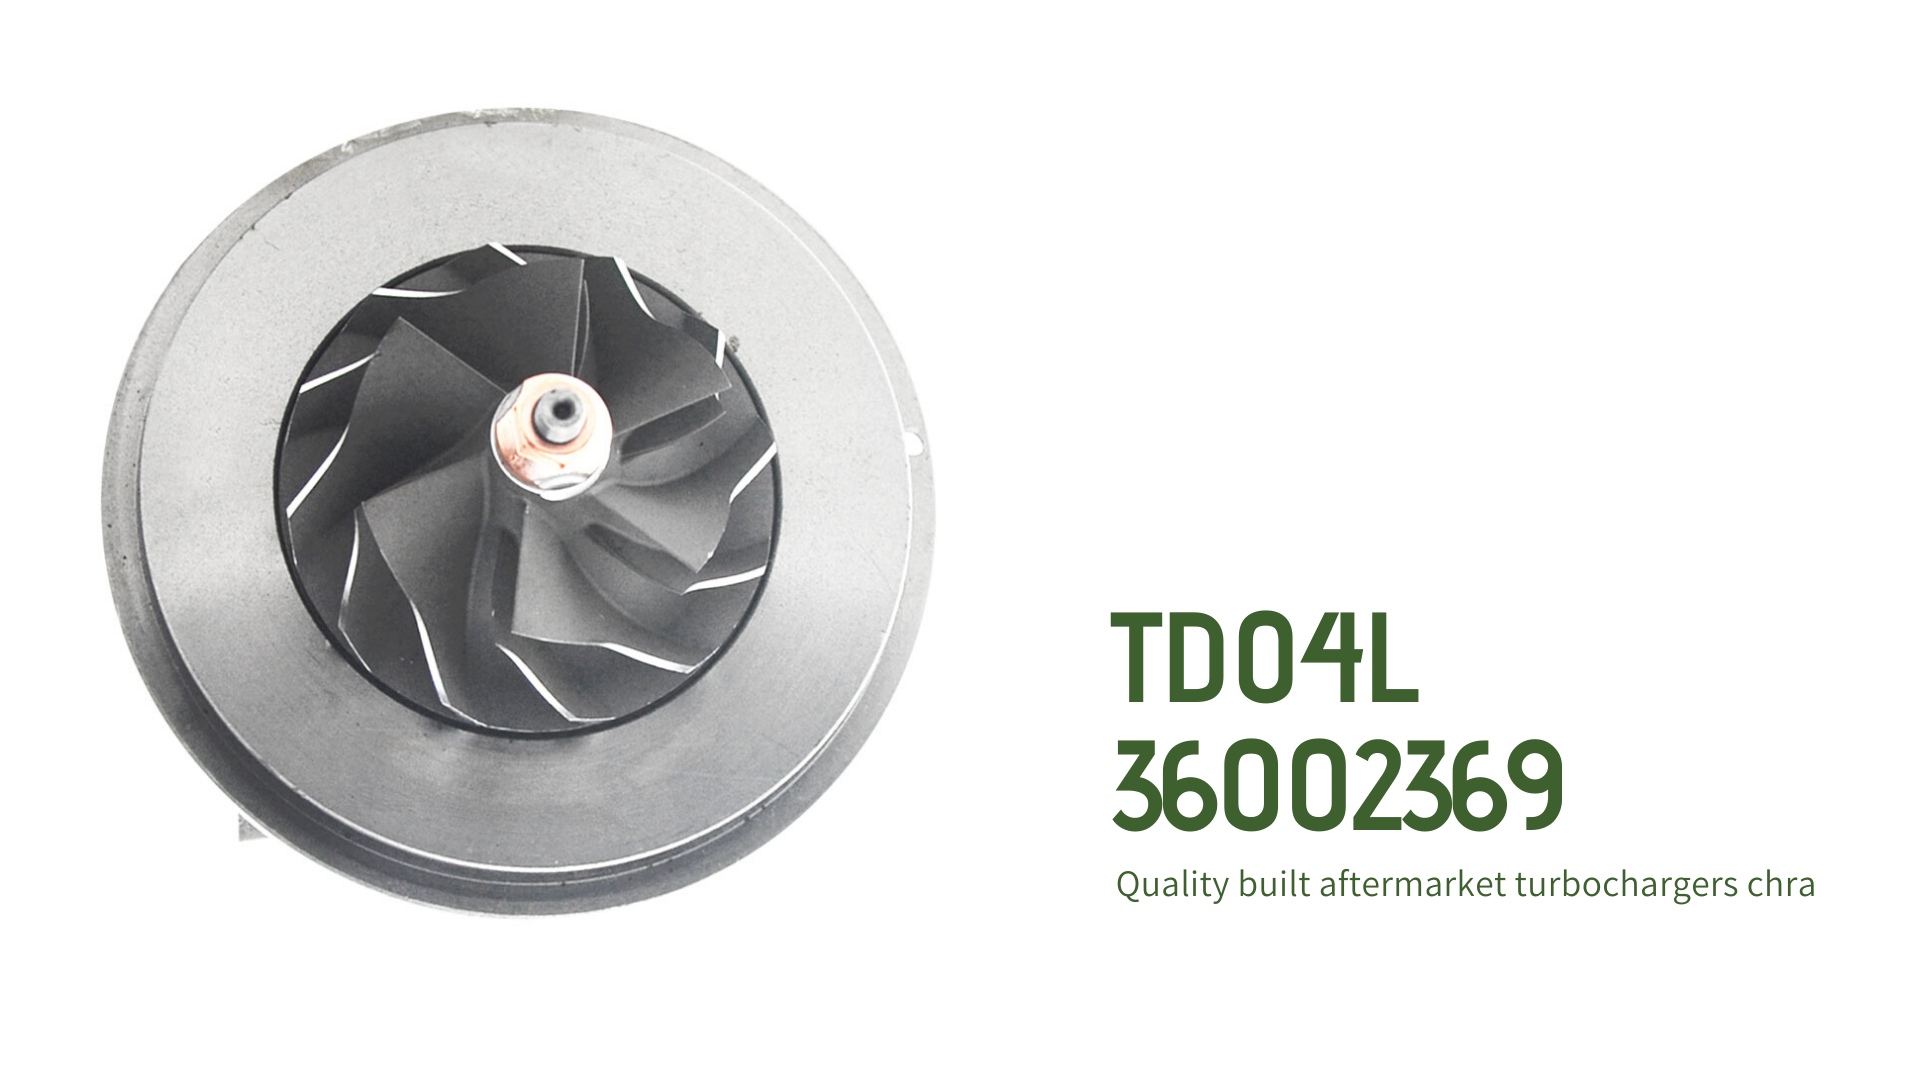 36002369 Cartridge For TD04L 49377-06210 Turbocharger